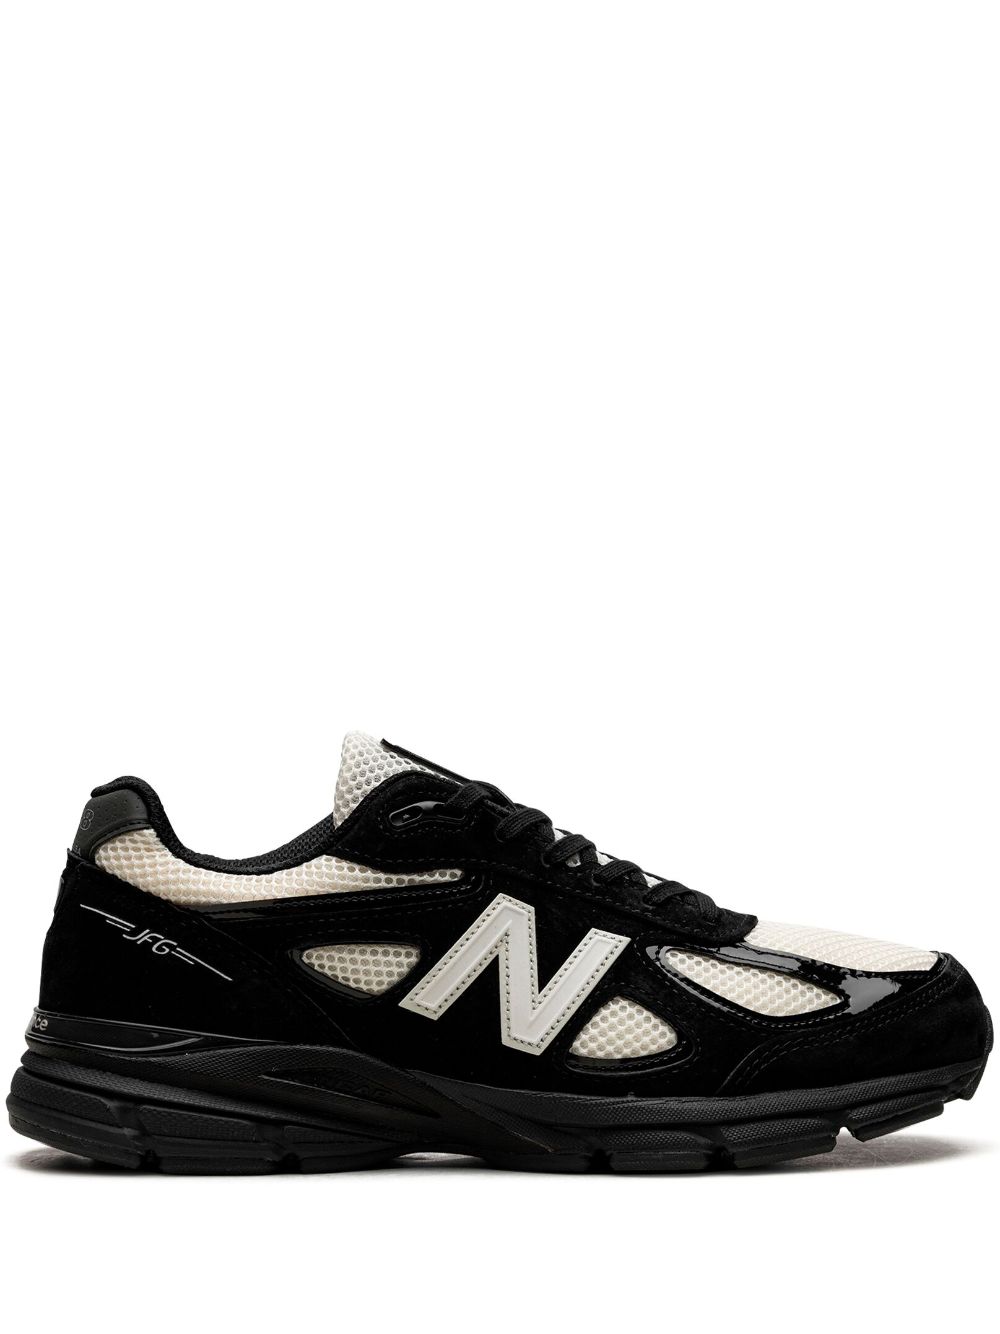 New Balance 990v4 "Joe Freshgoods - Black" sneakers